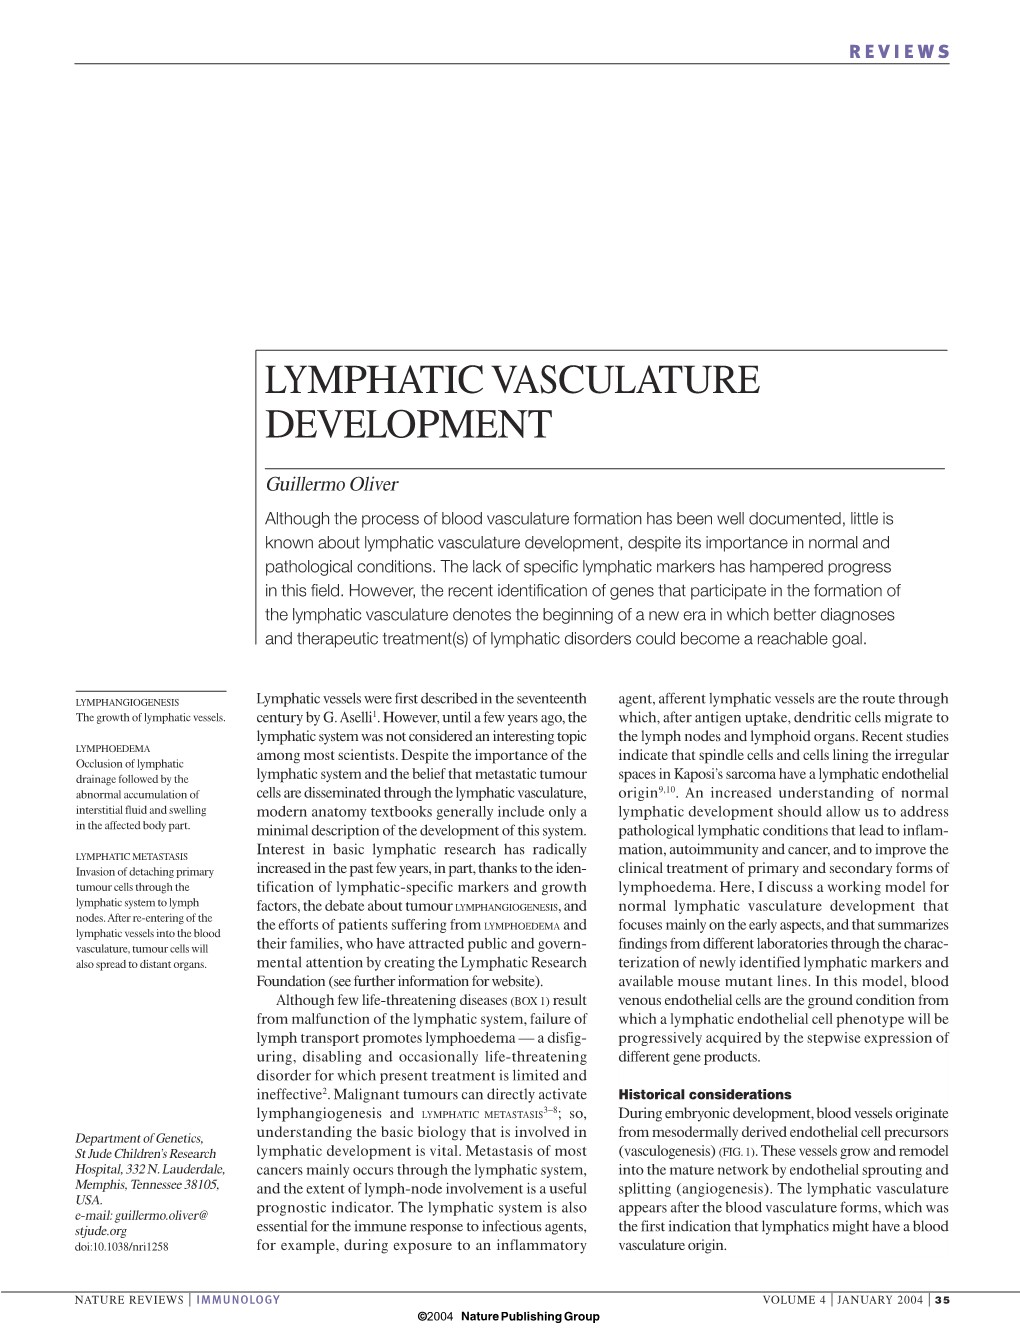 Lymphatic Vasculature Development